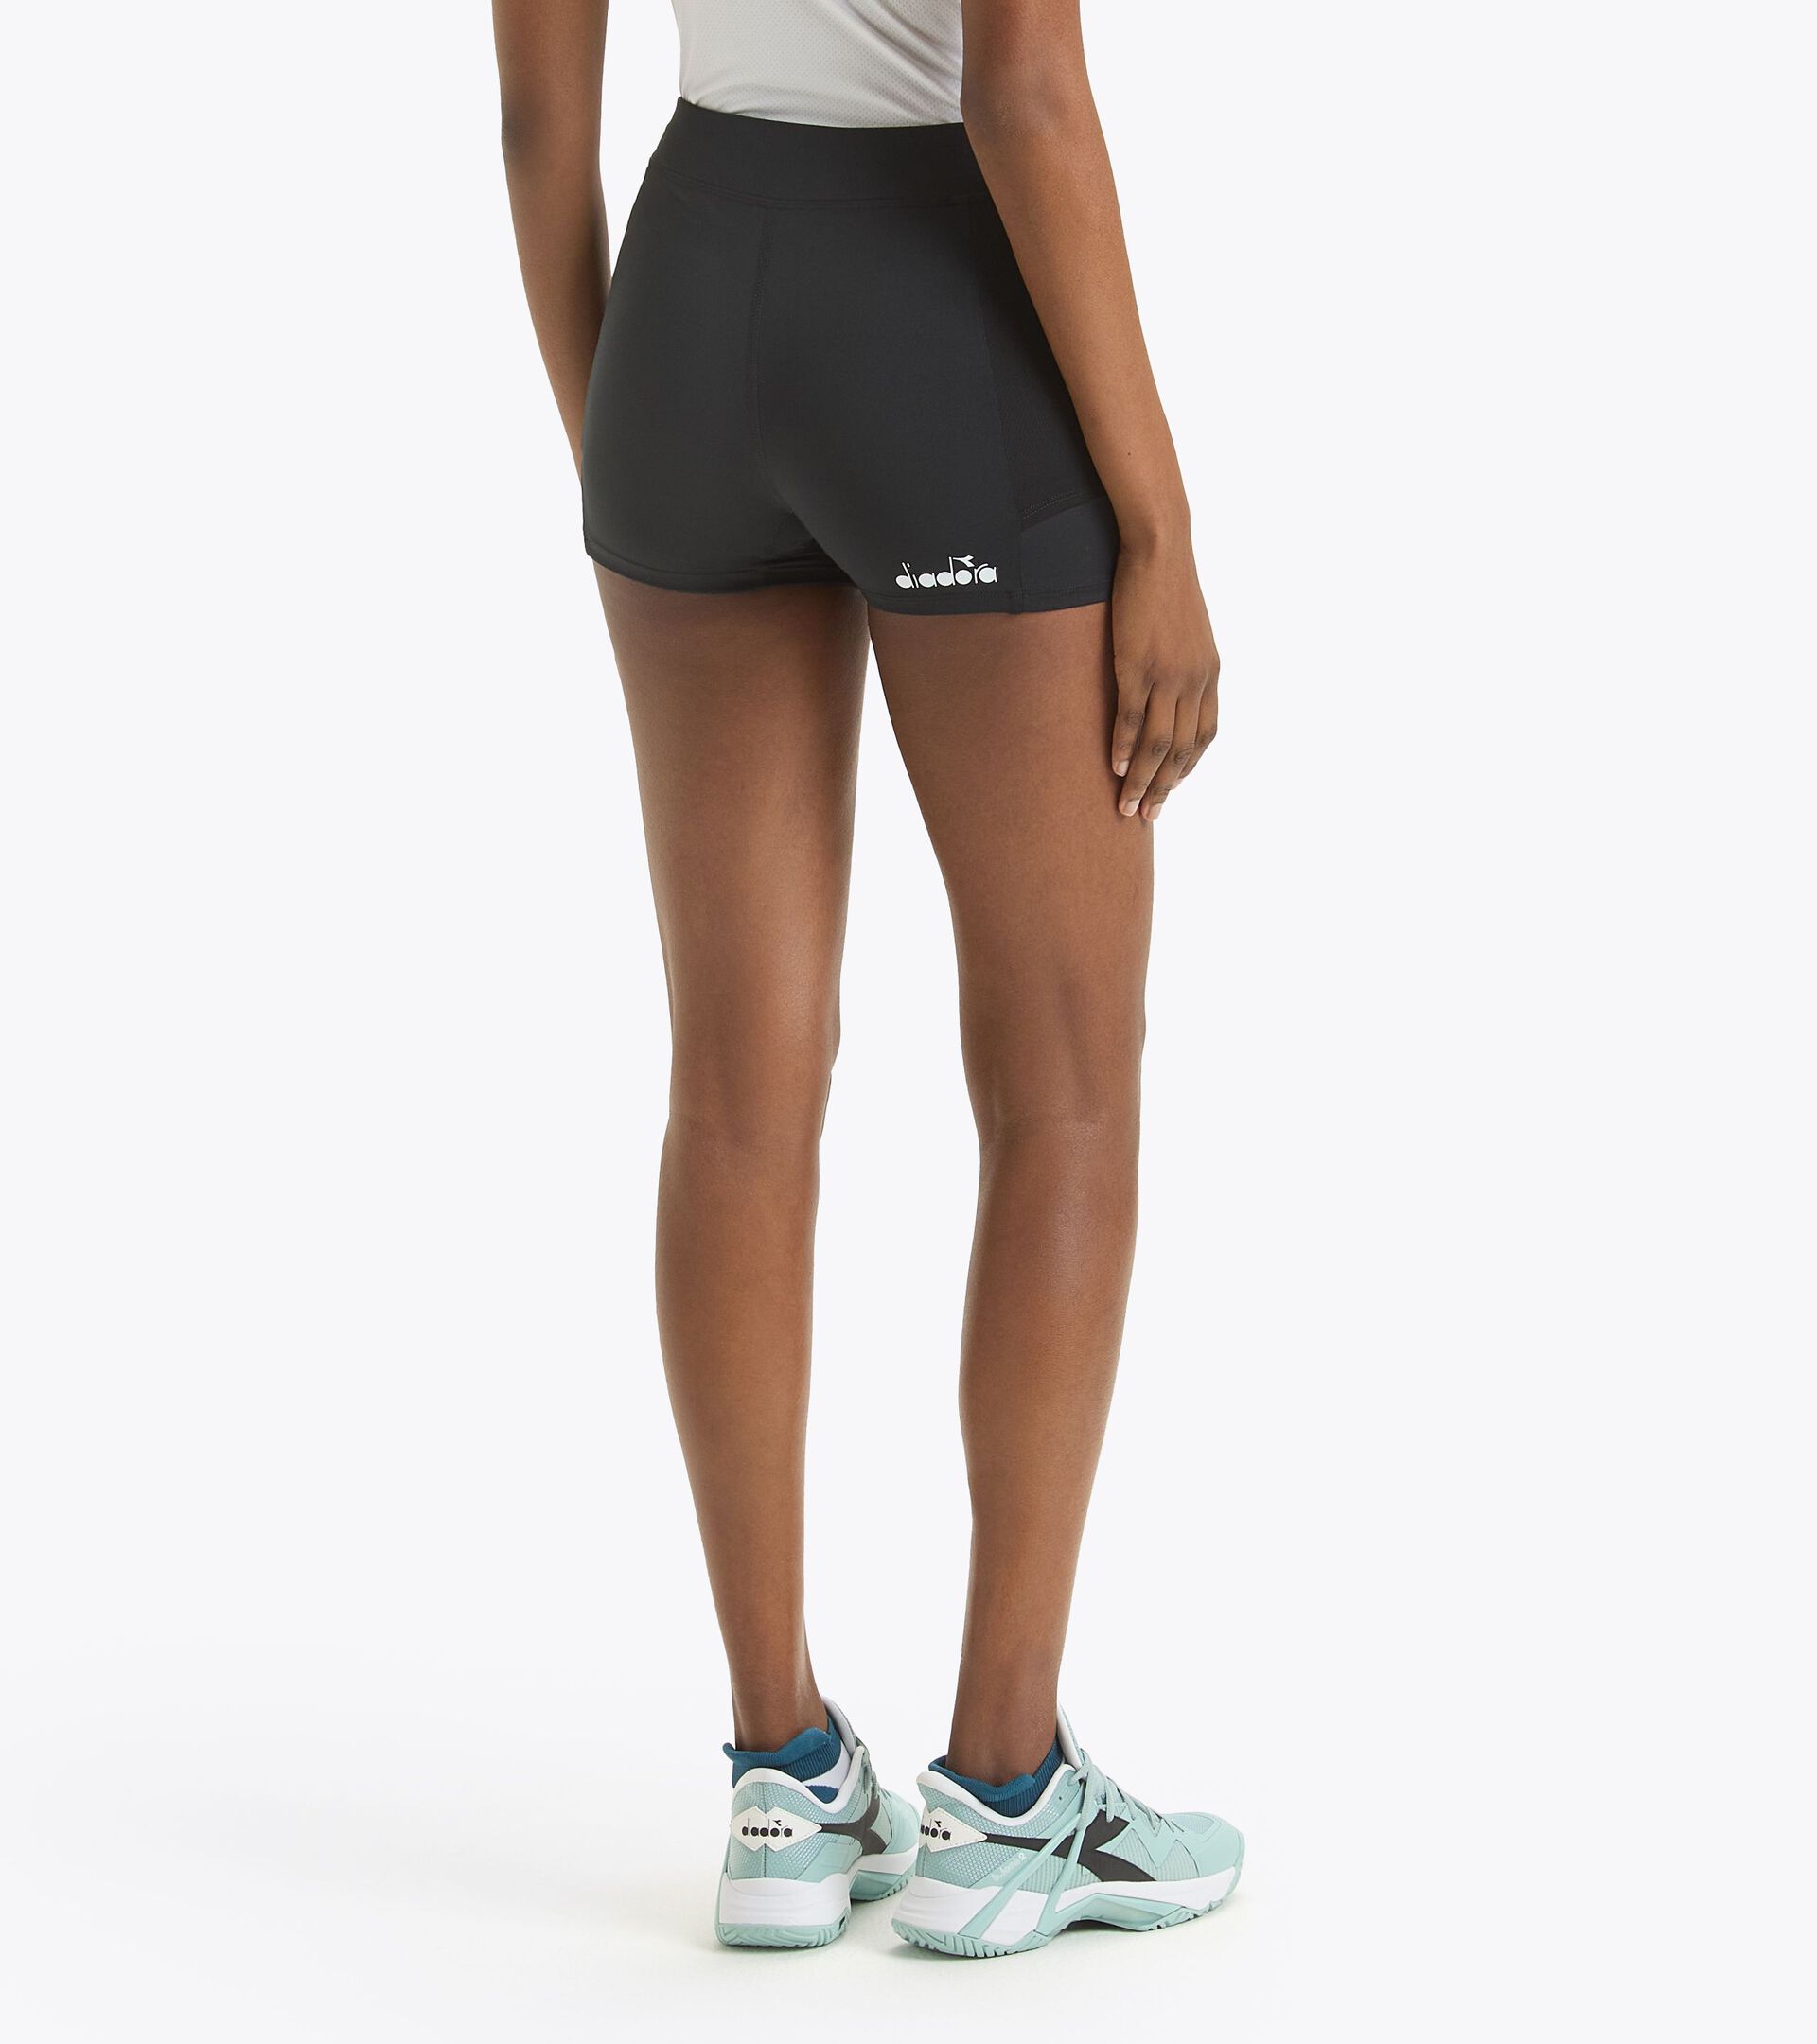 L. SHORT TIGHTS POCKET Tennis shorts - Women - Diadora Online Store